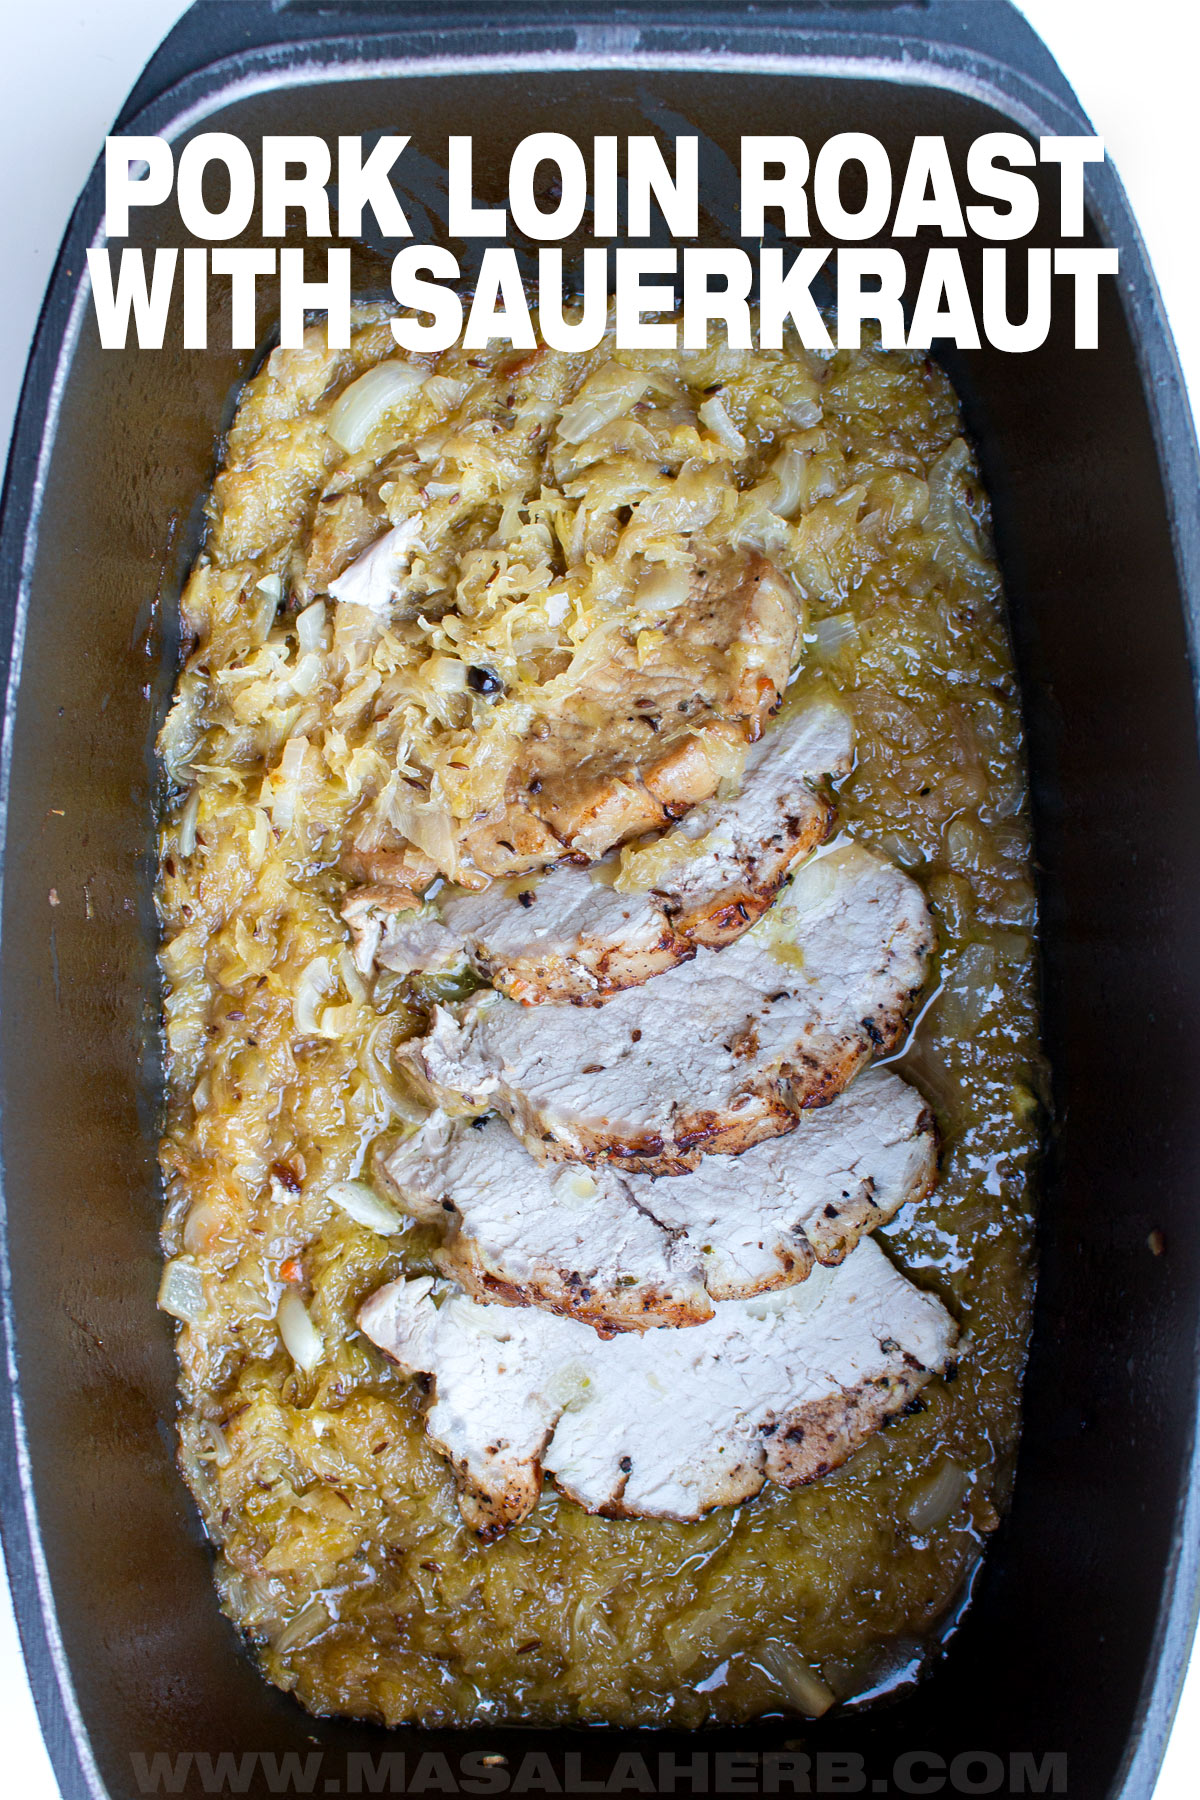 Pork Loin Roast with Sauerkraut Recipe pin image